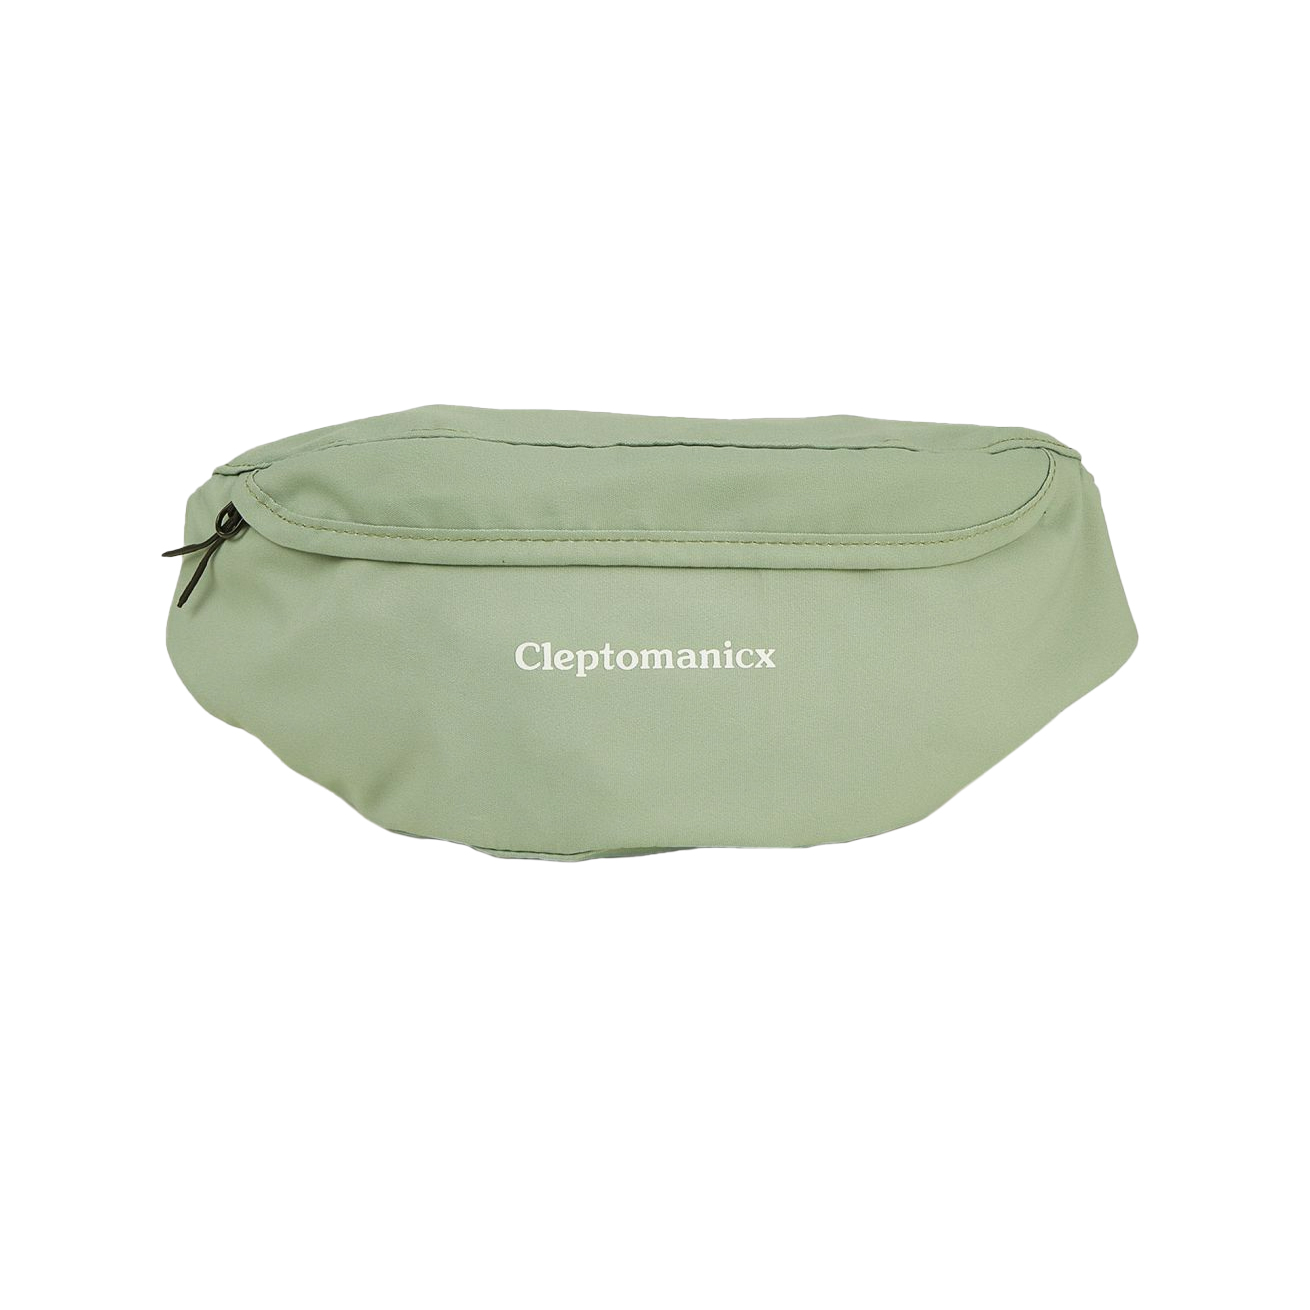 Cleptomanicx Hipbag Mega (ice green)